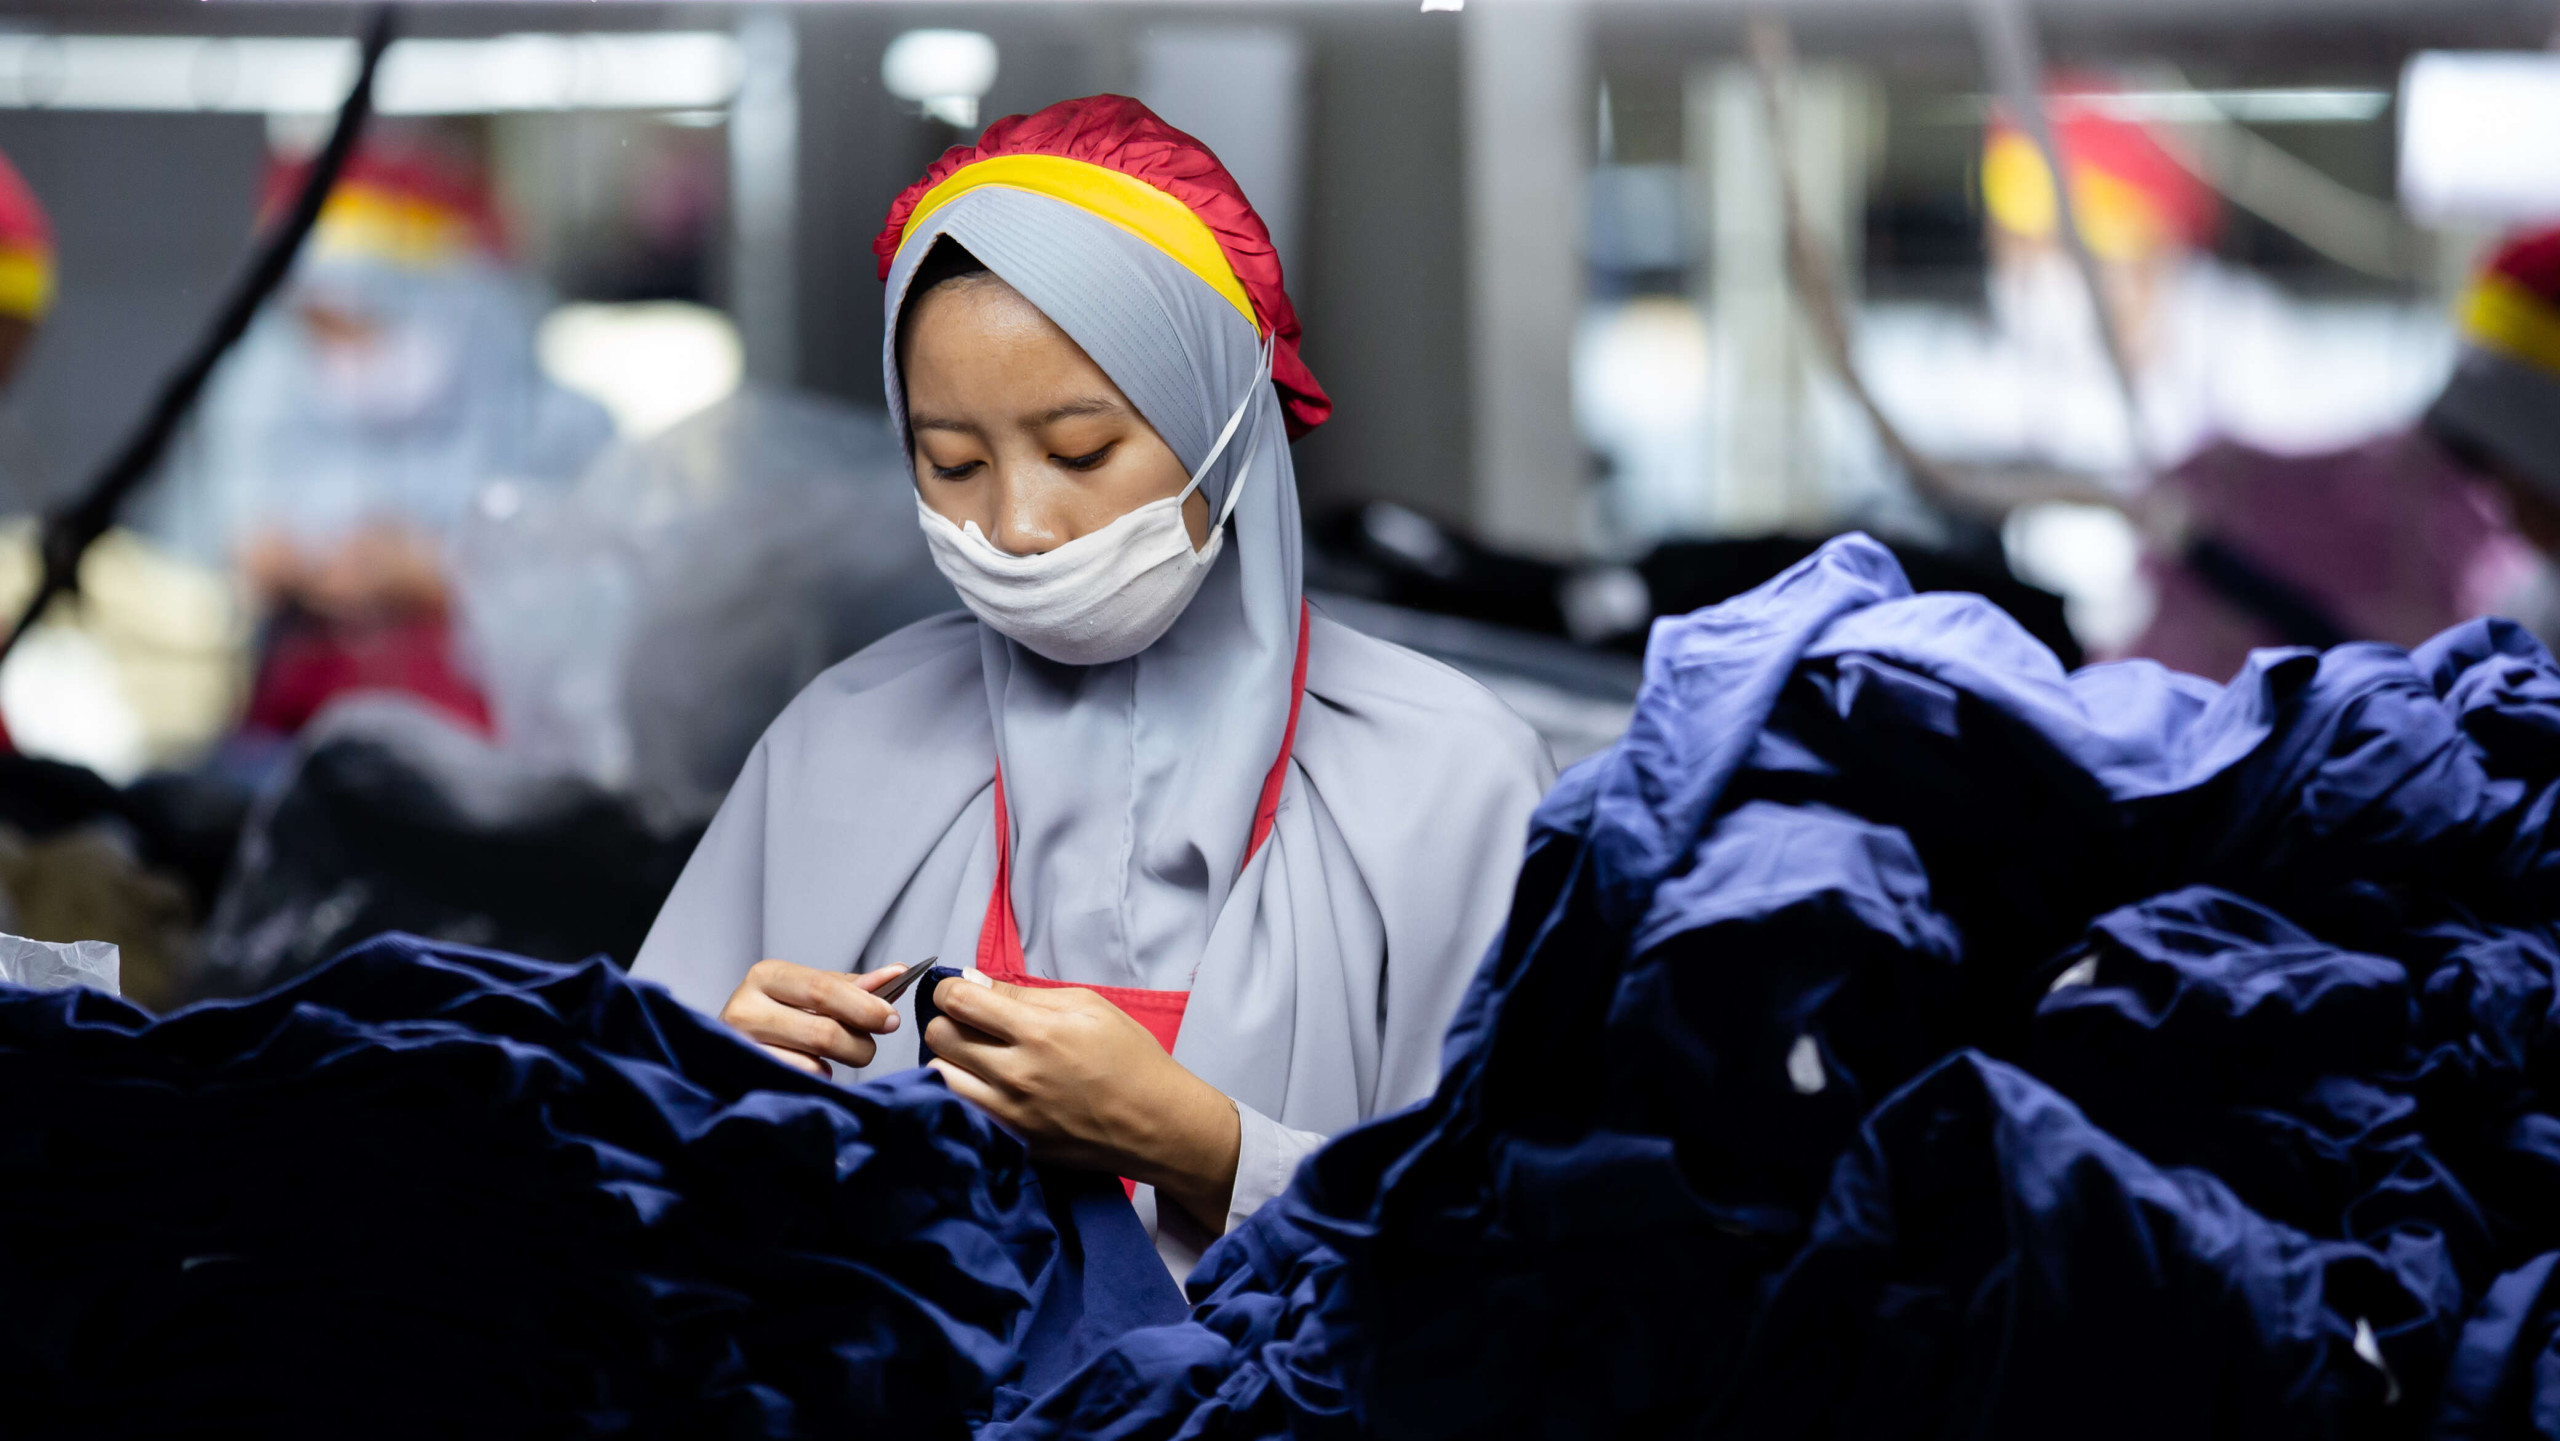 Indonesia - garment worker - Bogor